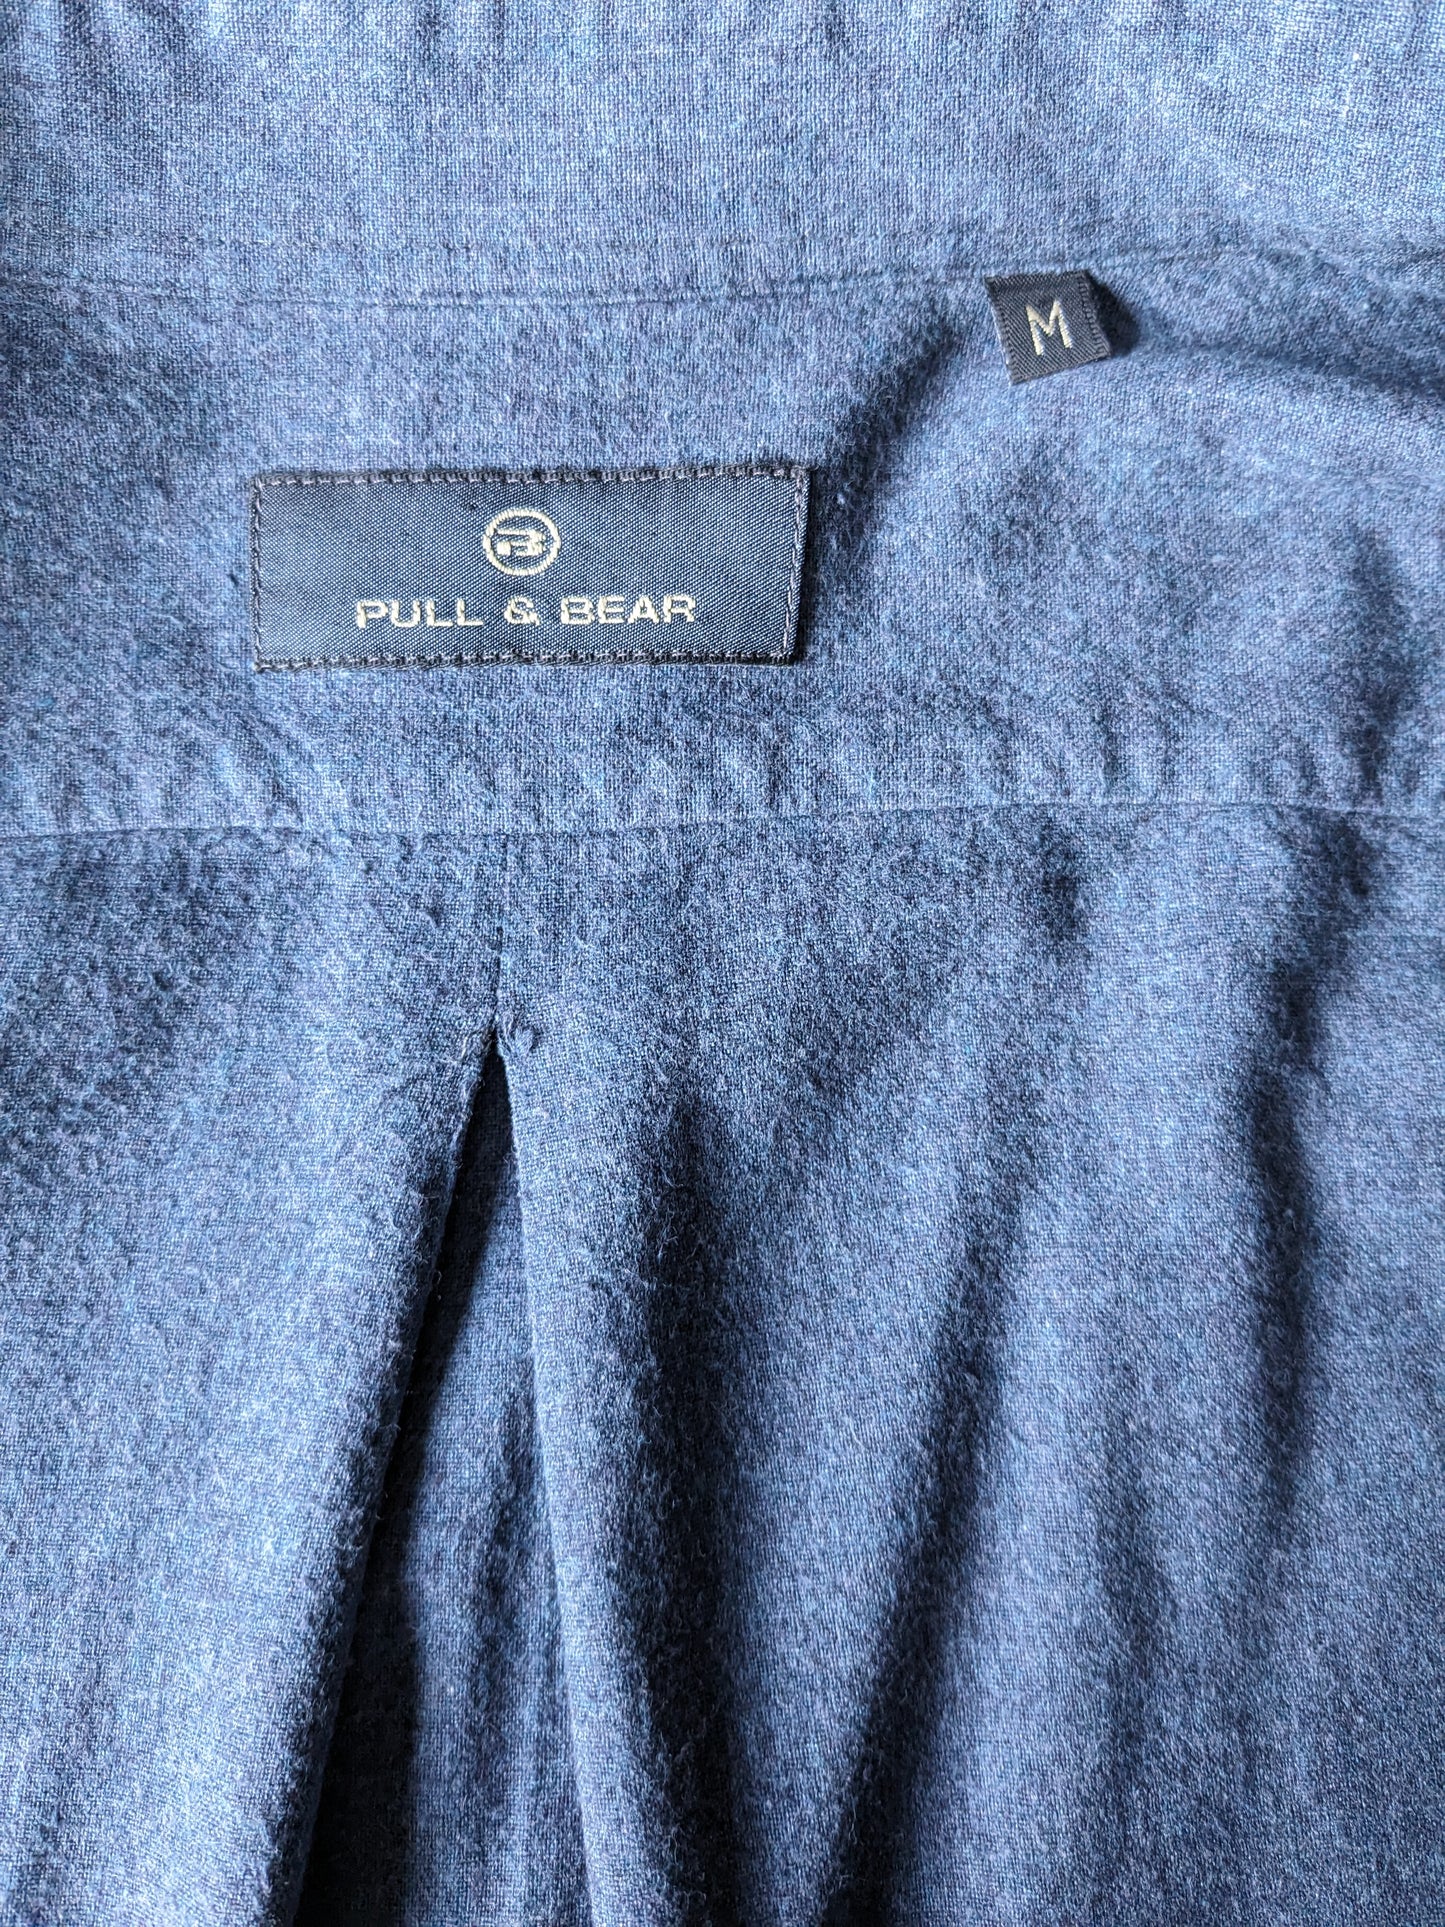 Pull & Bear shirt. Dark blue mixed. Size M.